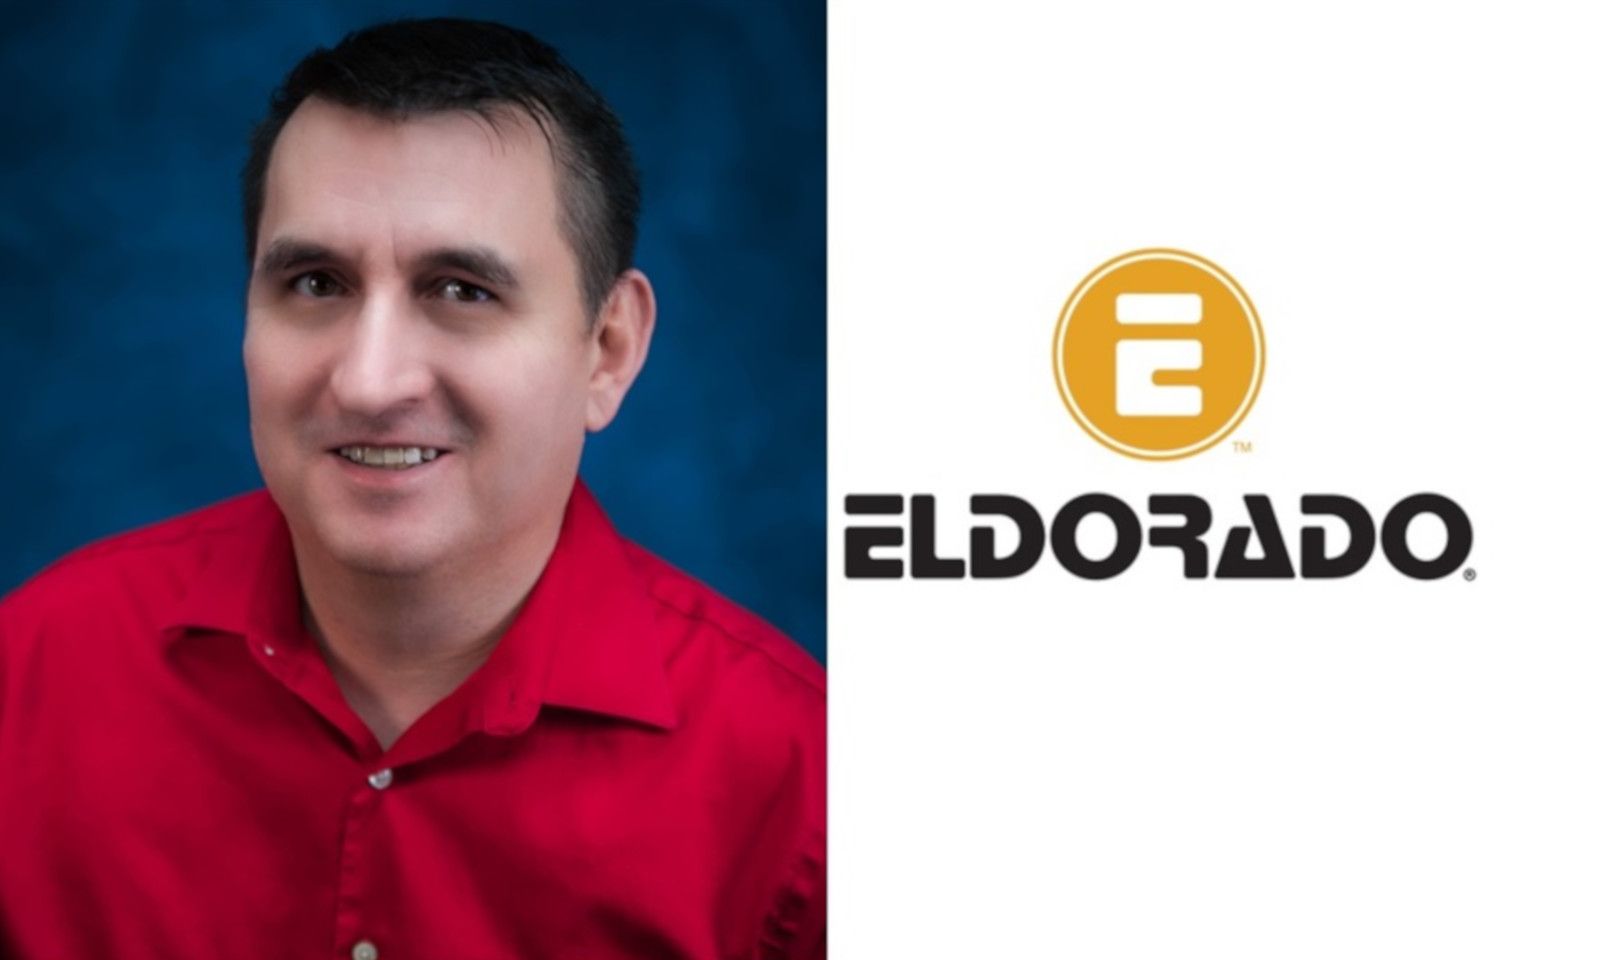 Eldorado Trading Co. Names Nathan Morimitsu to Top Marketing Post